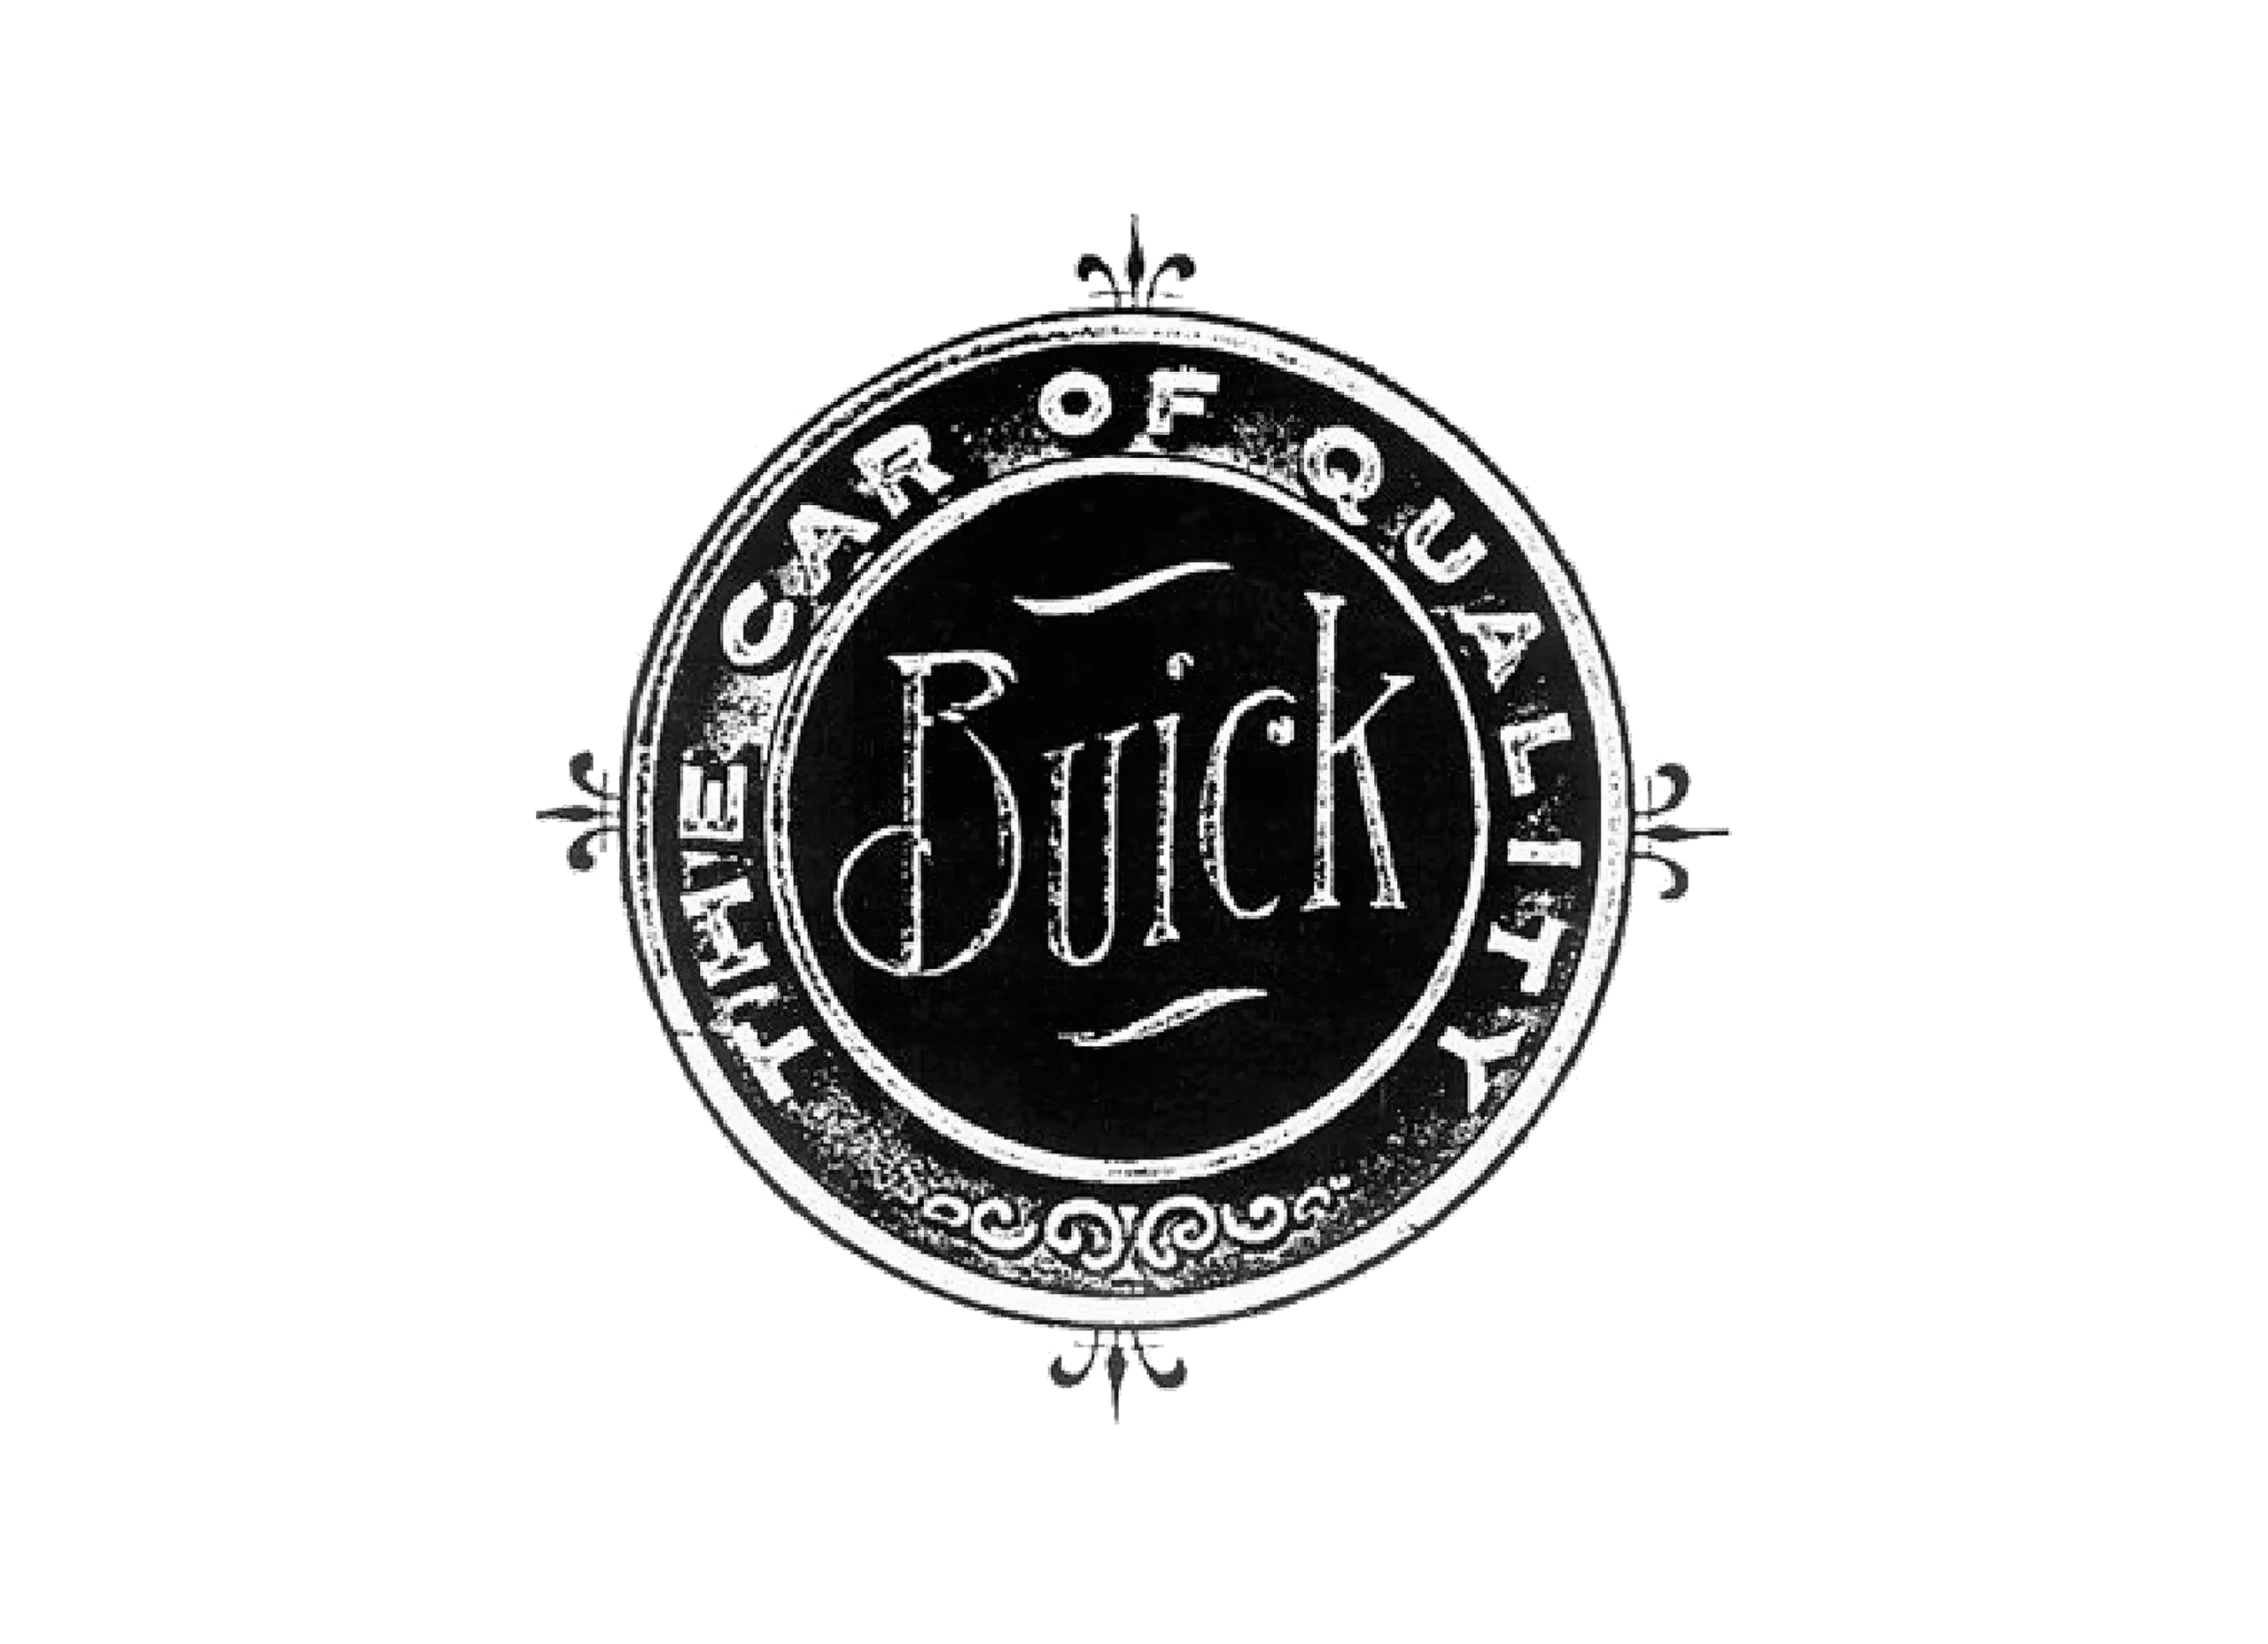 Buick logo 1905-1911